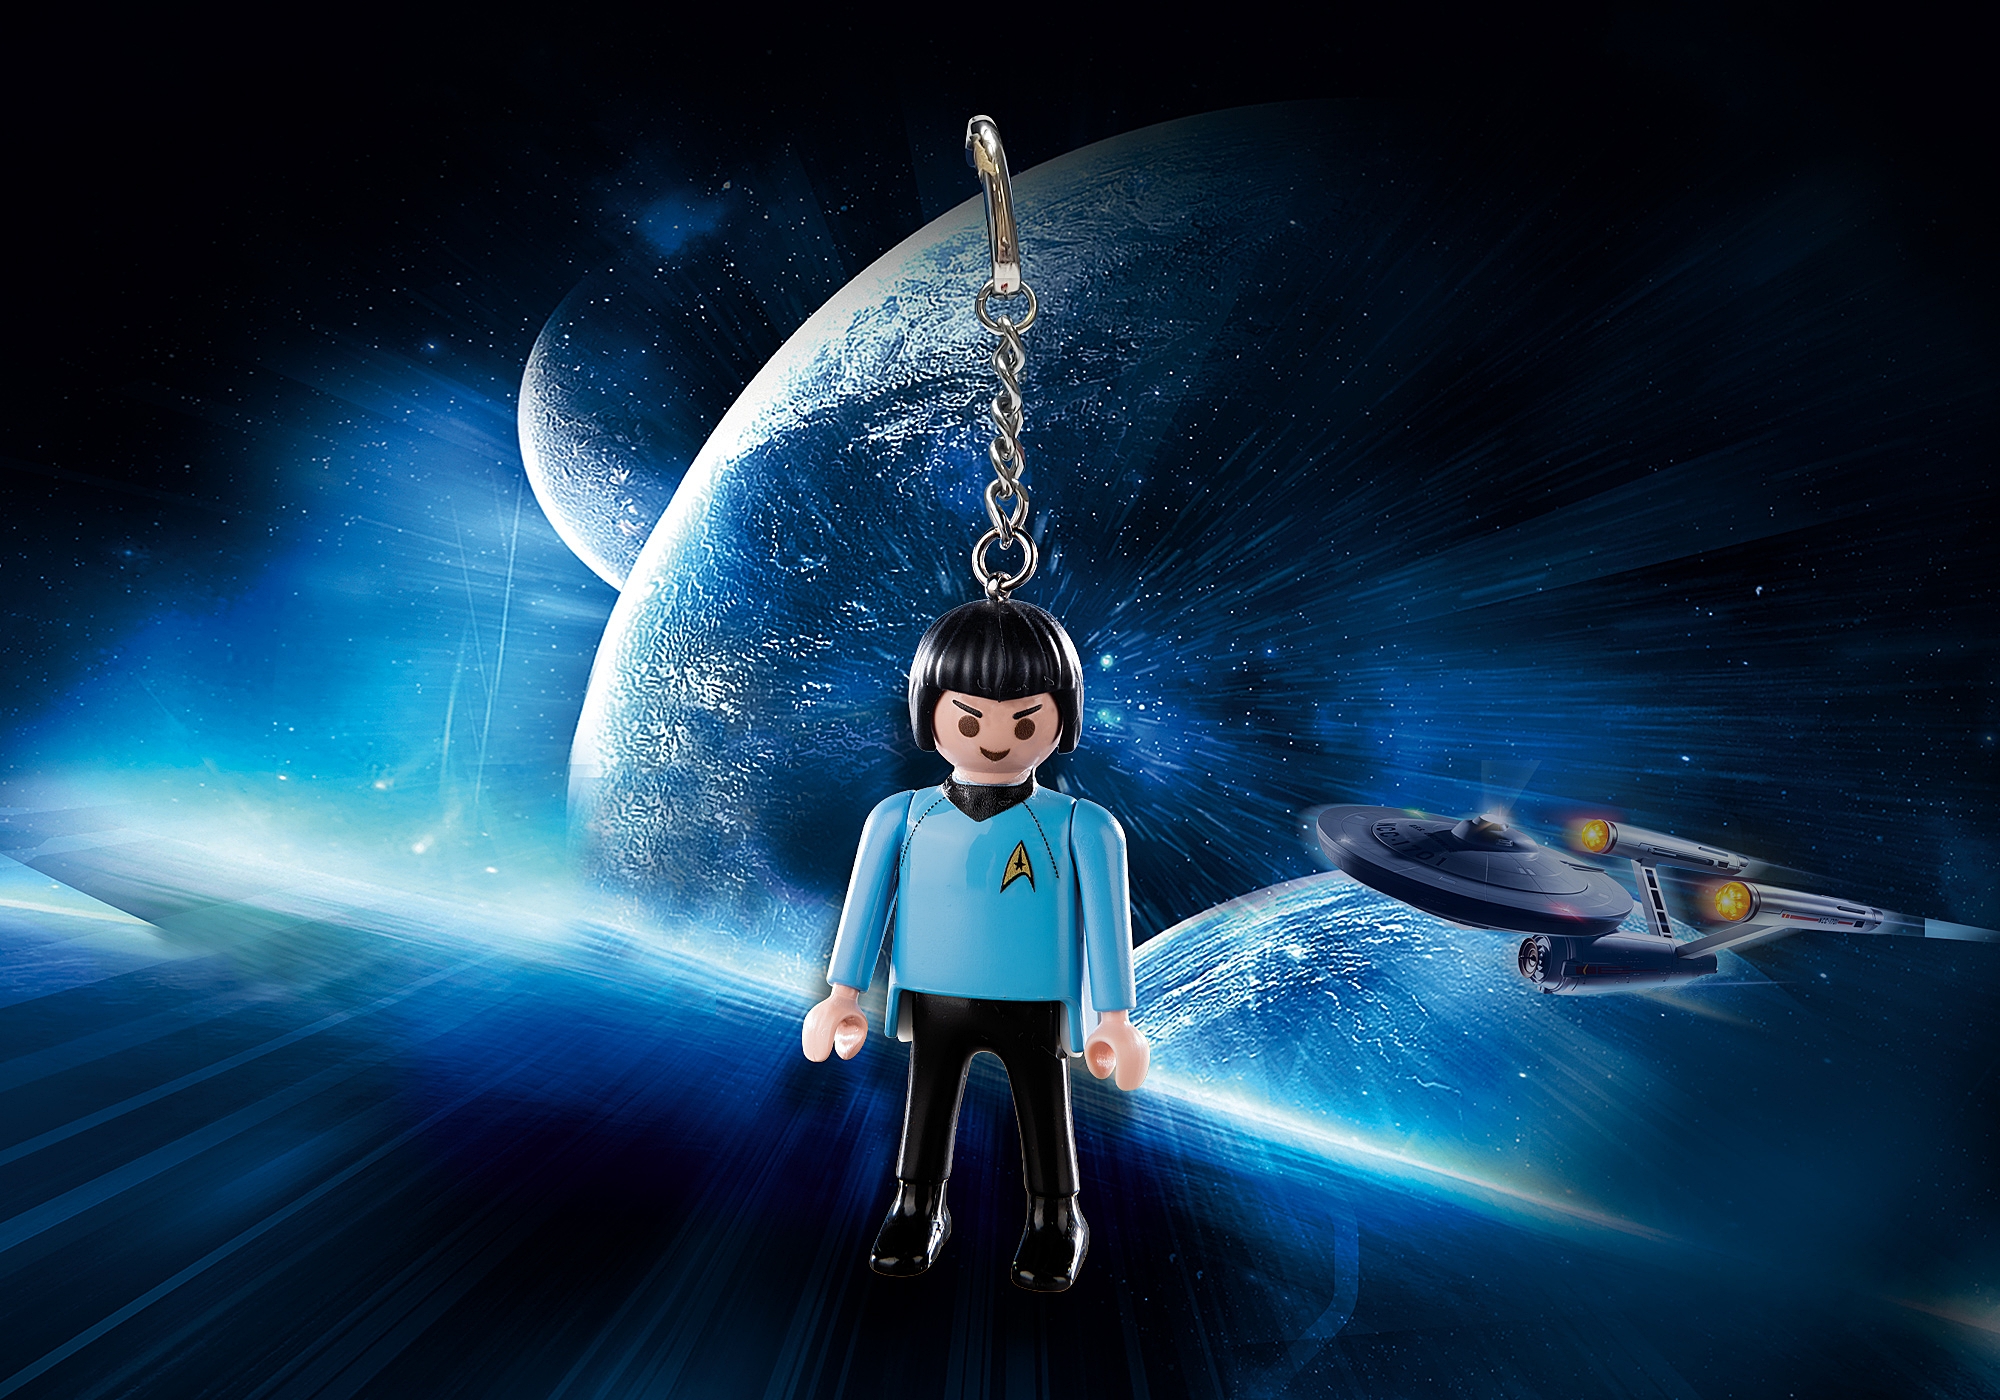 Playmobil Star Trek Dr Spok Keychain -  Ireland